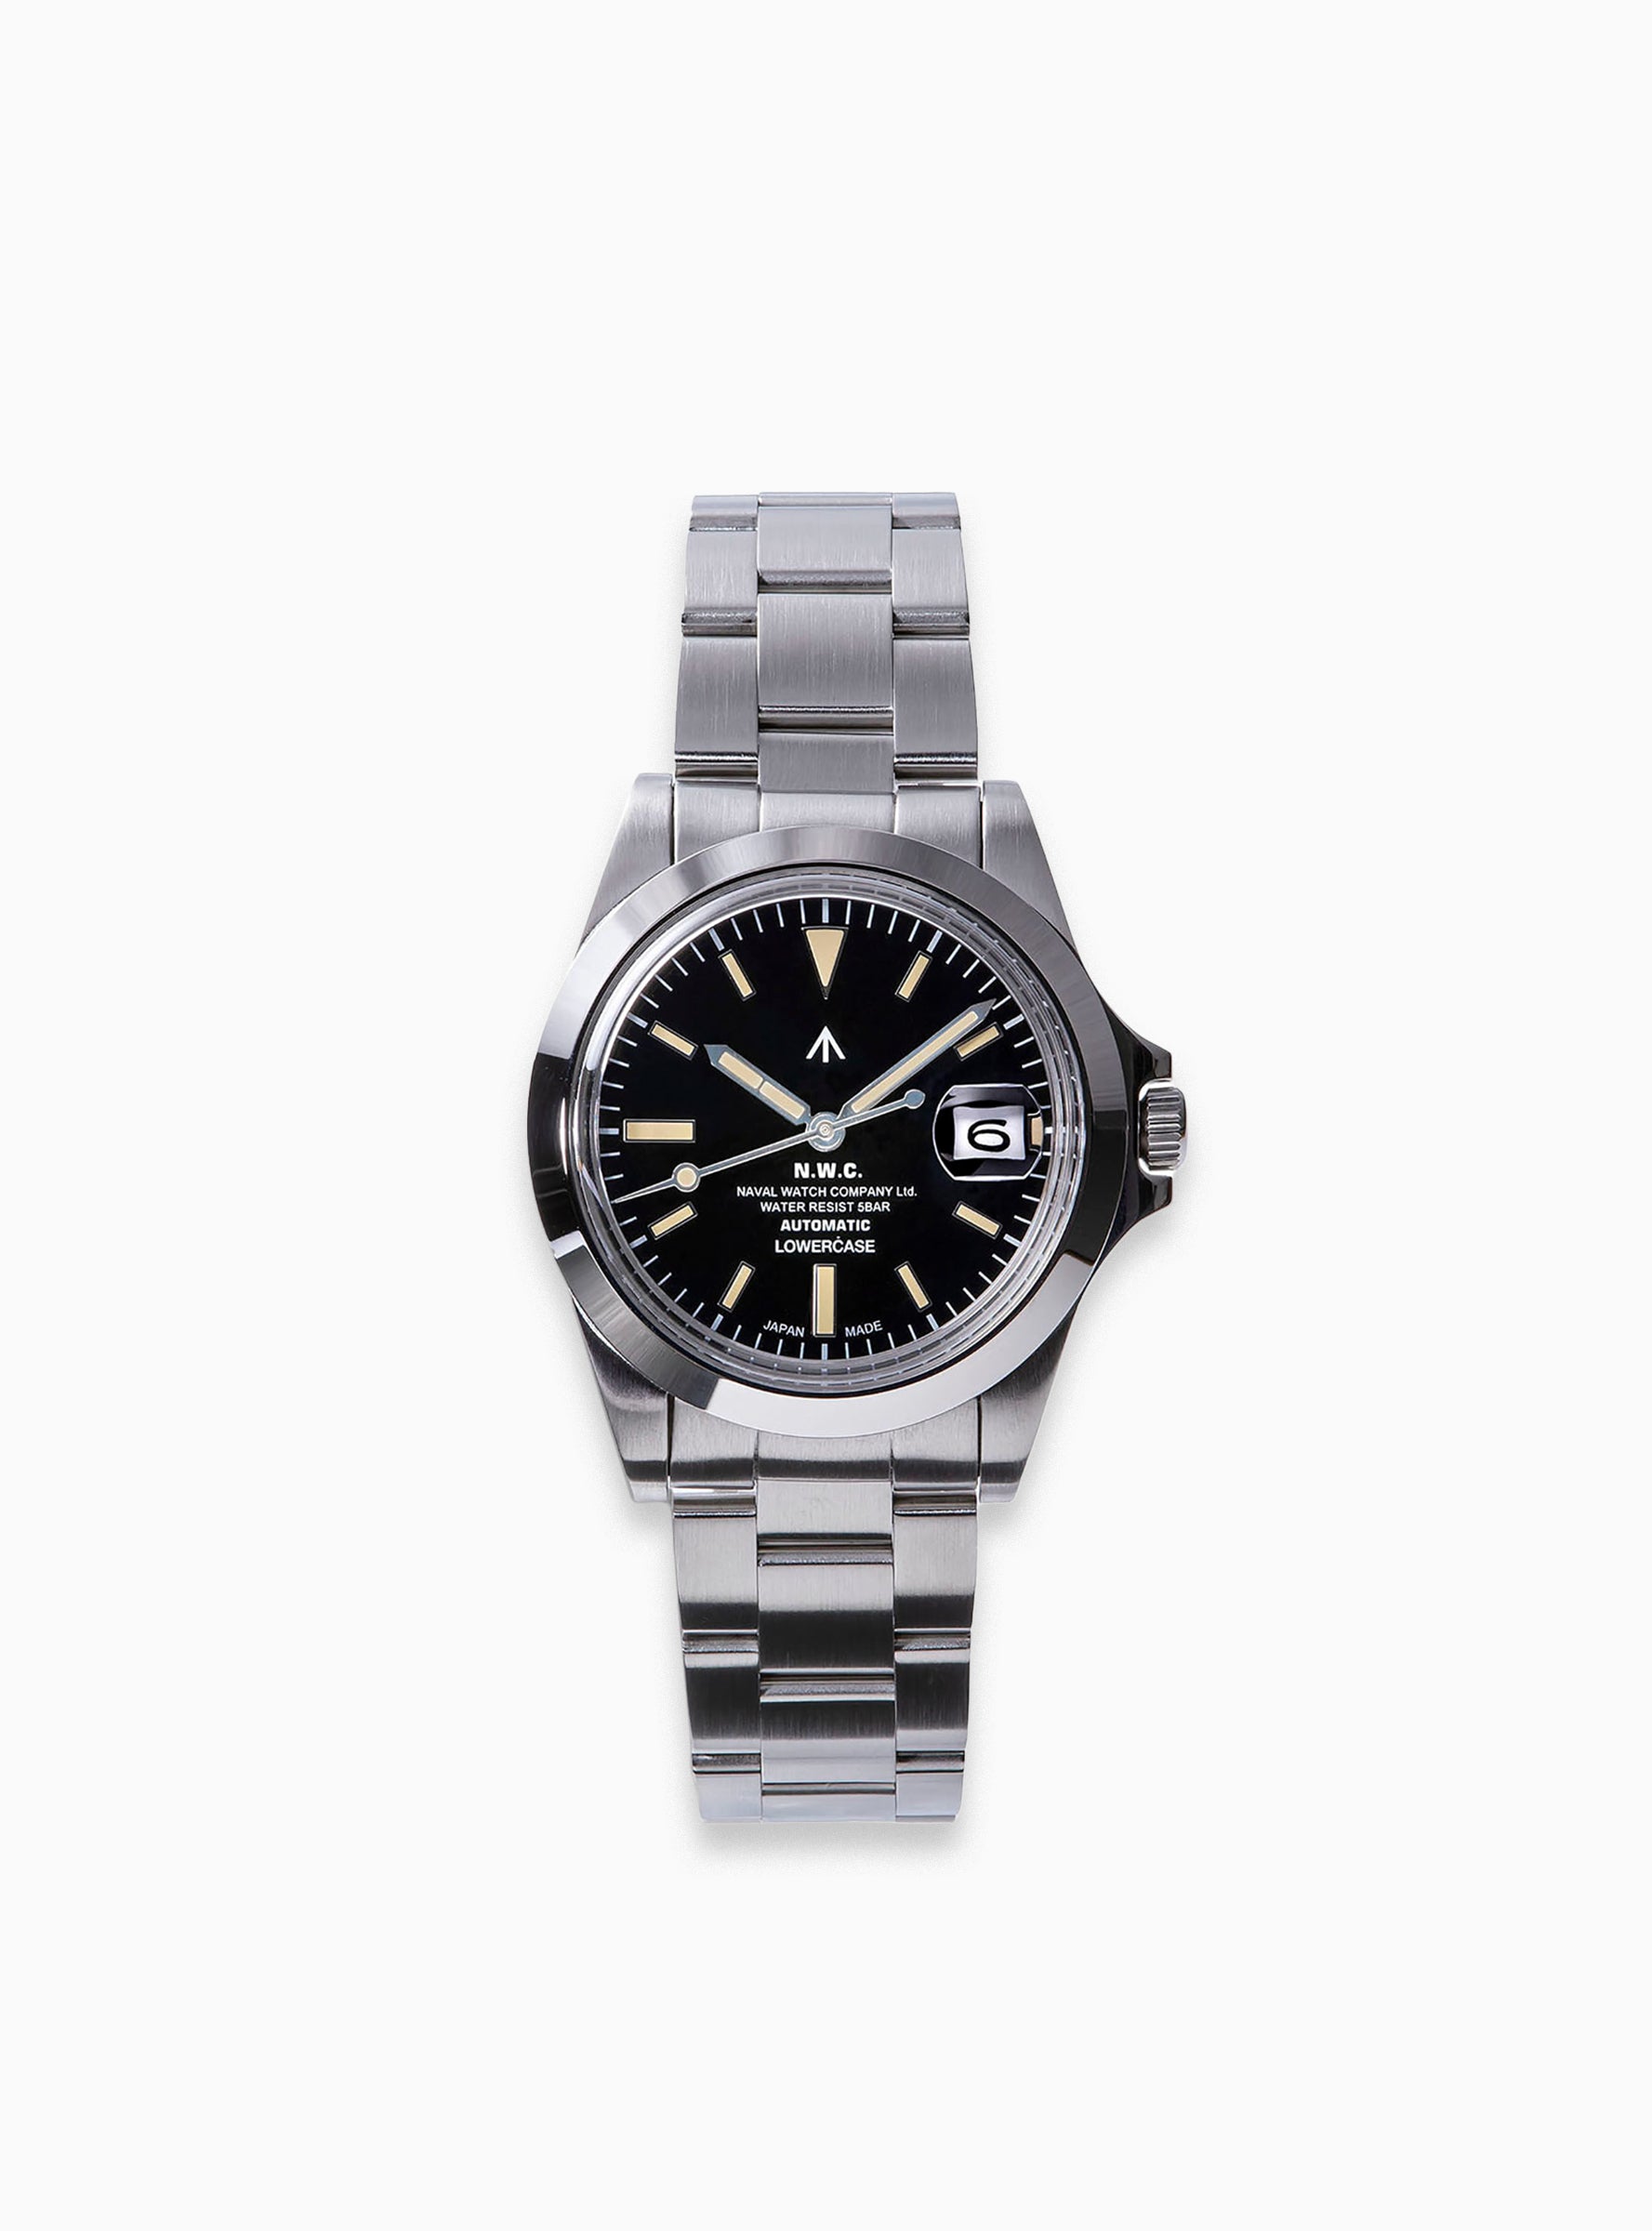  Naval Watch Co. Naval FRXA001 Automatic Watch Black